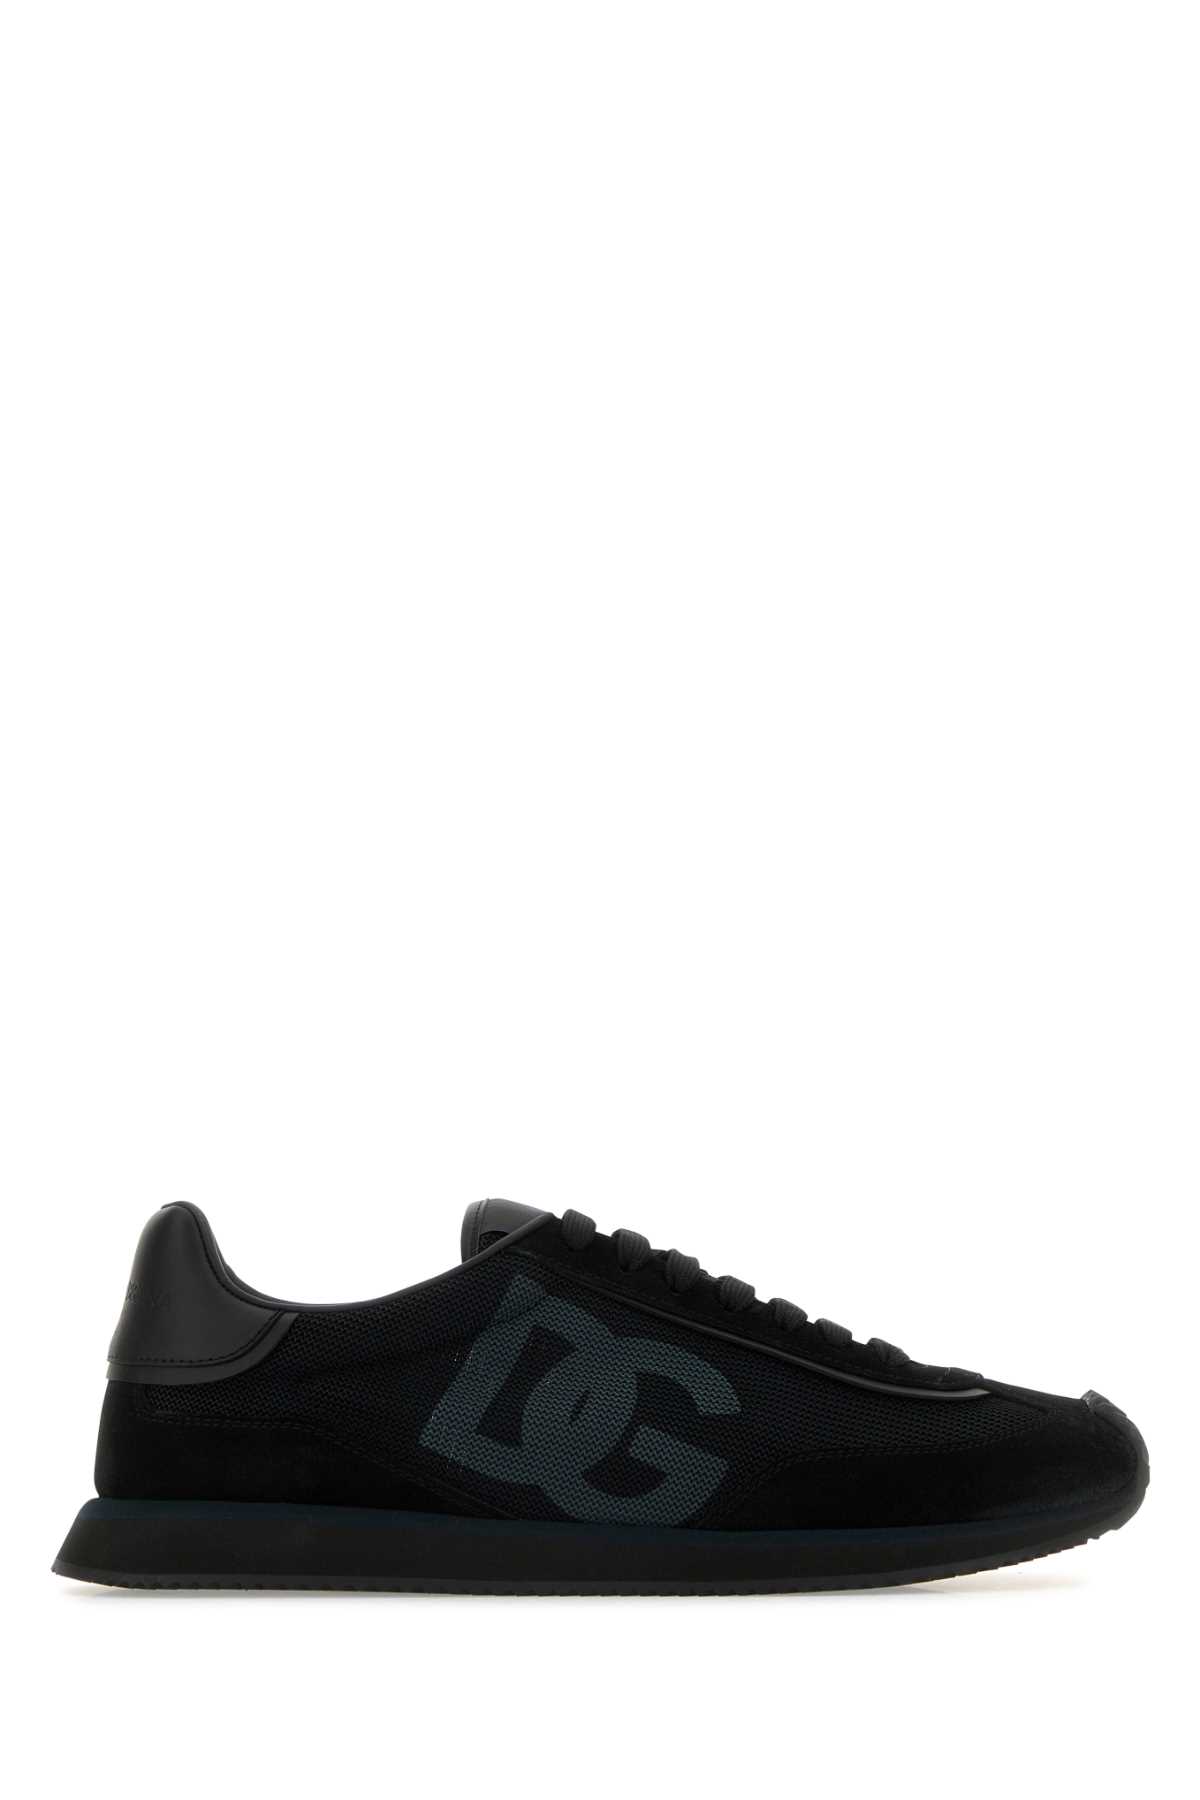 Dolce & Gabbana Black Suede And Mesh Dg Aria Sneakers In Blackblack